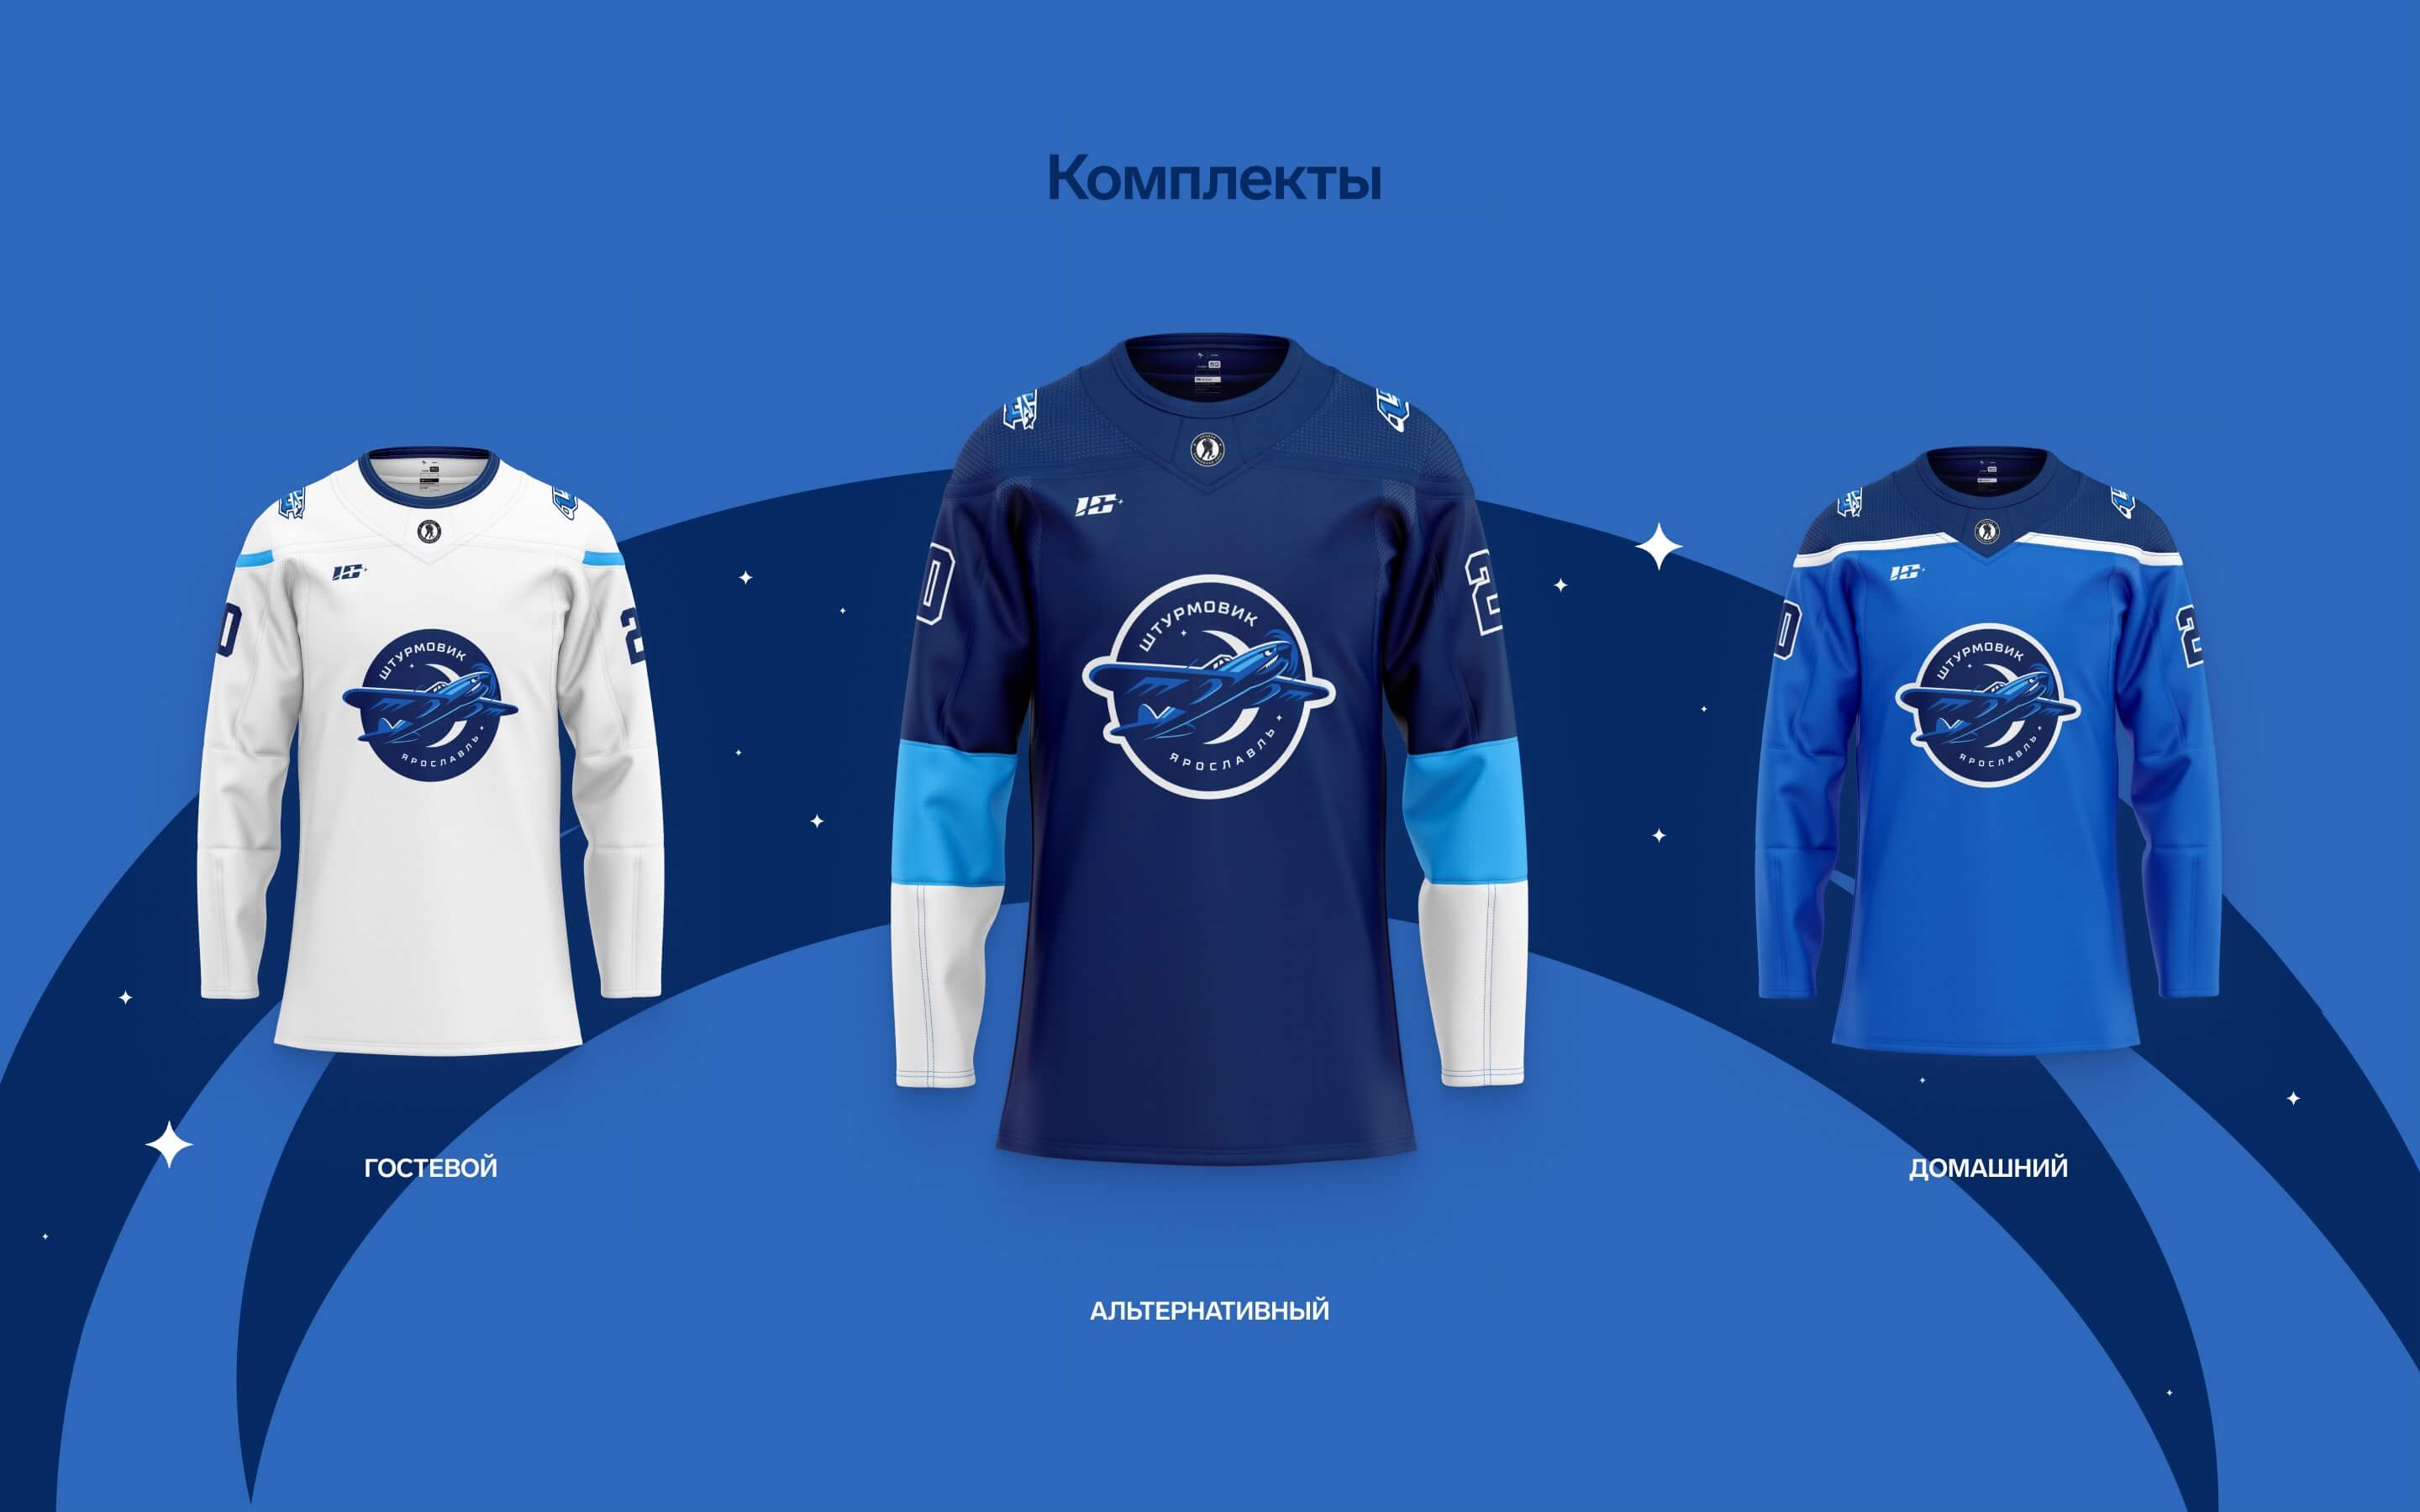 Hockey uniform jersey set